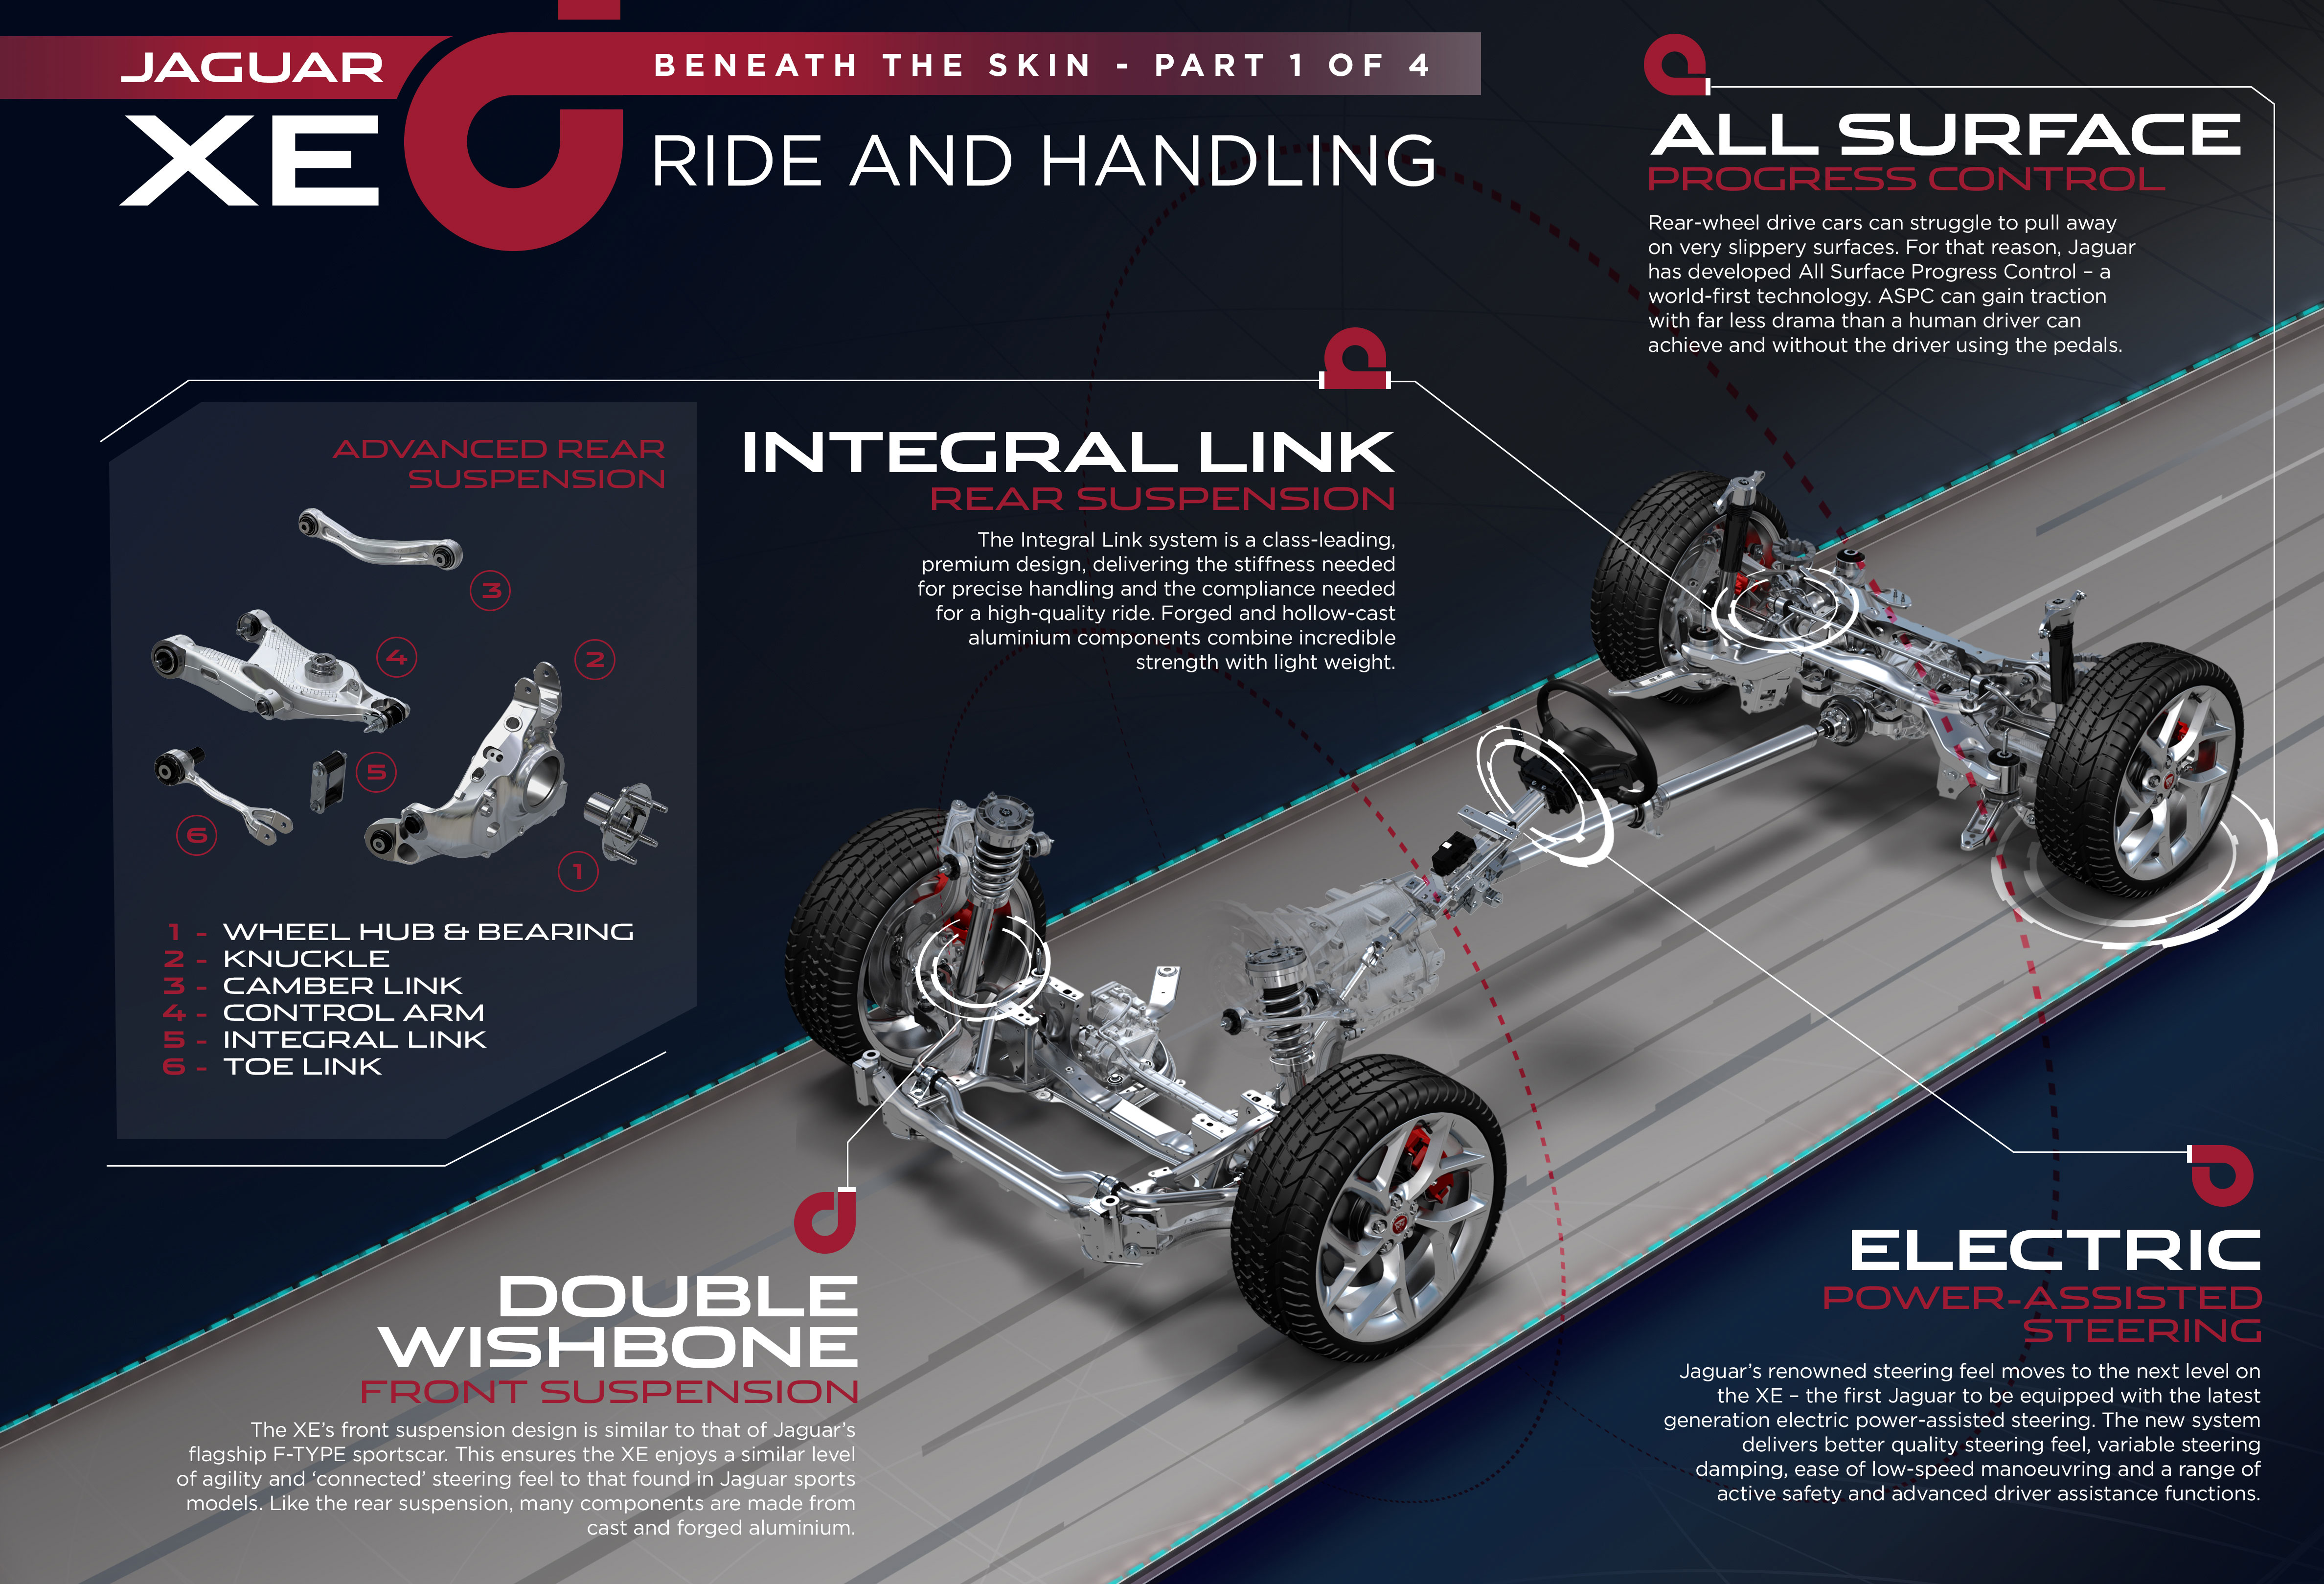 Components and more. Ягуар xe подвеска передняя. Задняя ходовая на Ягуар xe 2016. Jaguar xe Suspension. Integral link подвеска.